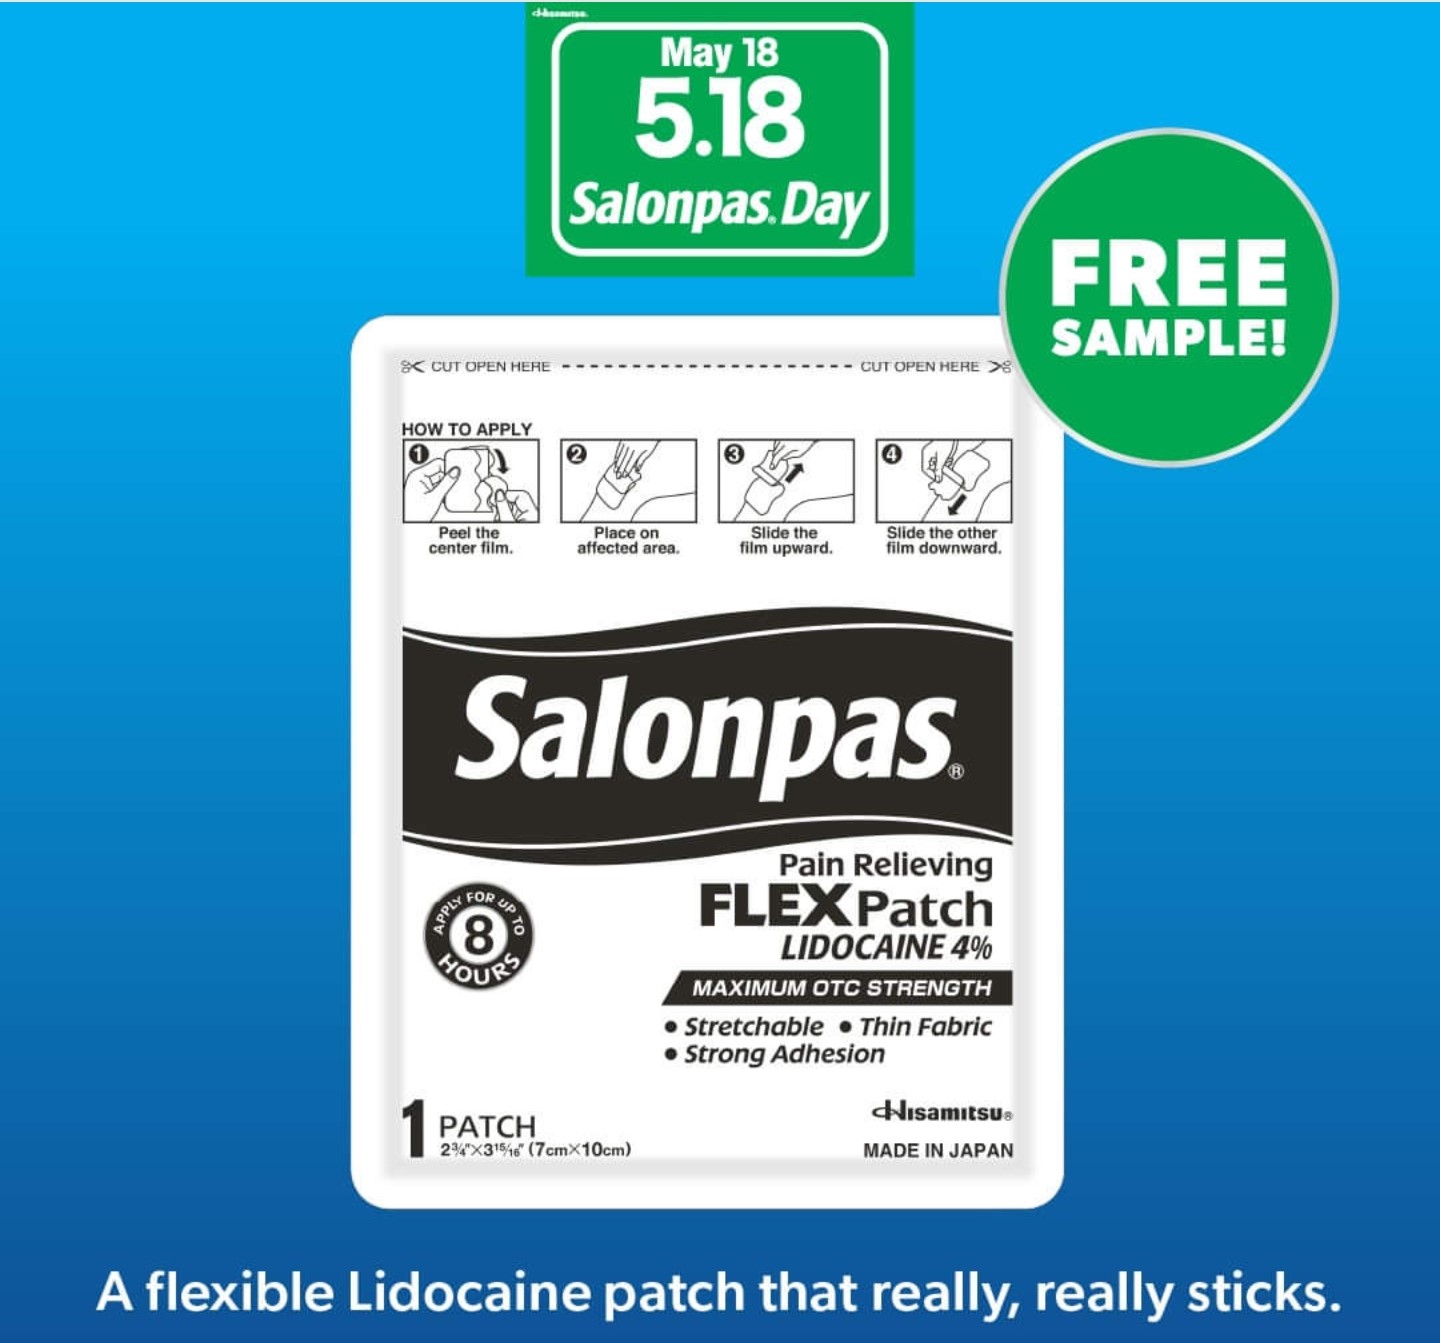 FREE Sample of Salonpas Lidocaine FLEX Patch